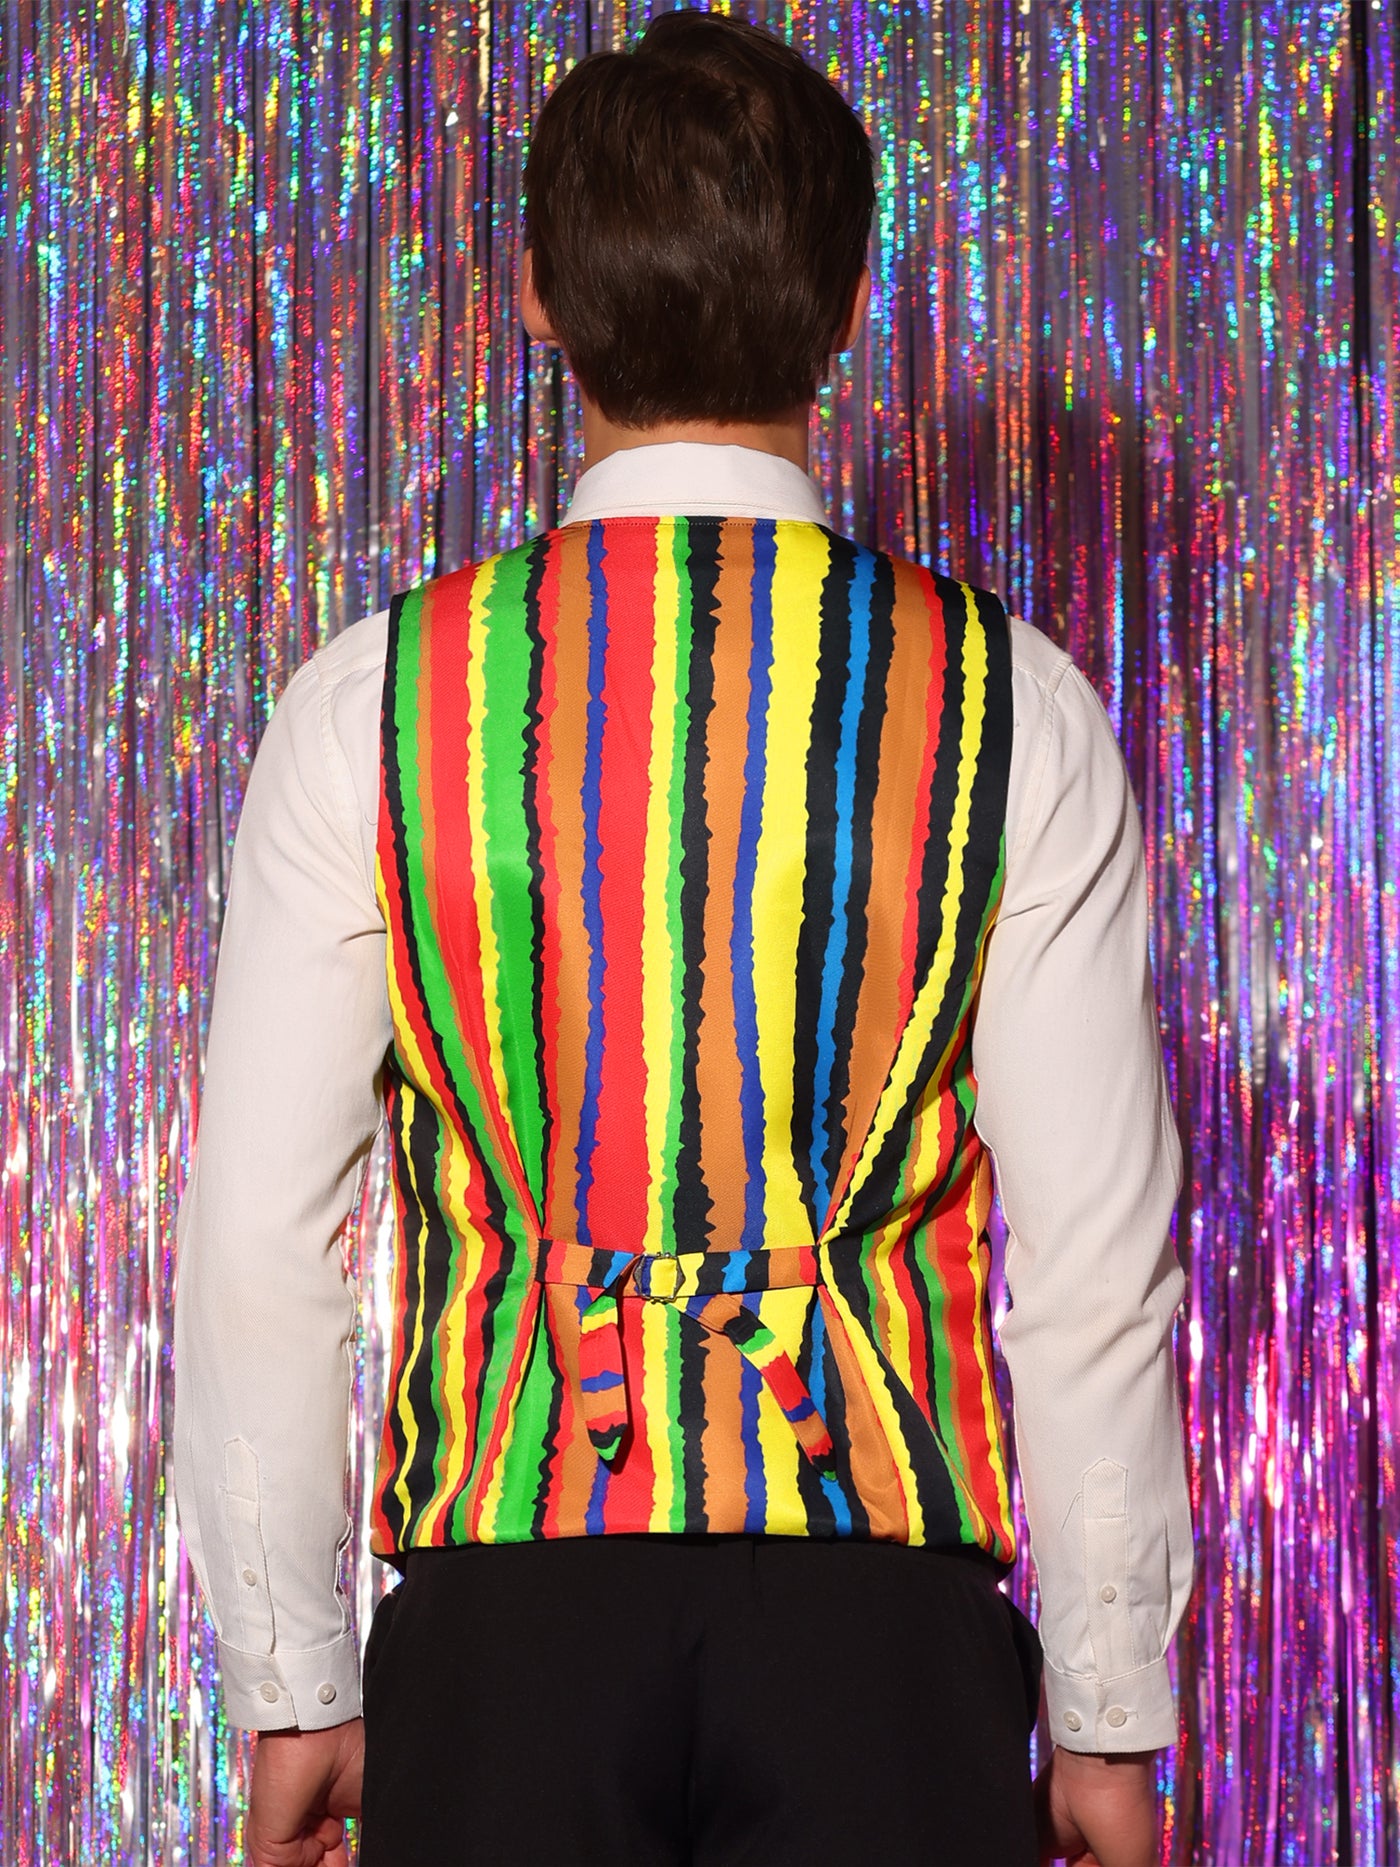 Bublédon Men's Rainbow Suit Vest Single Breasted V Neck Colorful Stripes Waistcoat